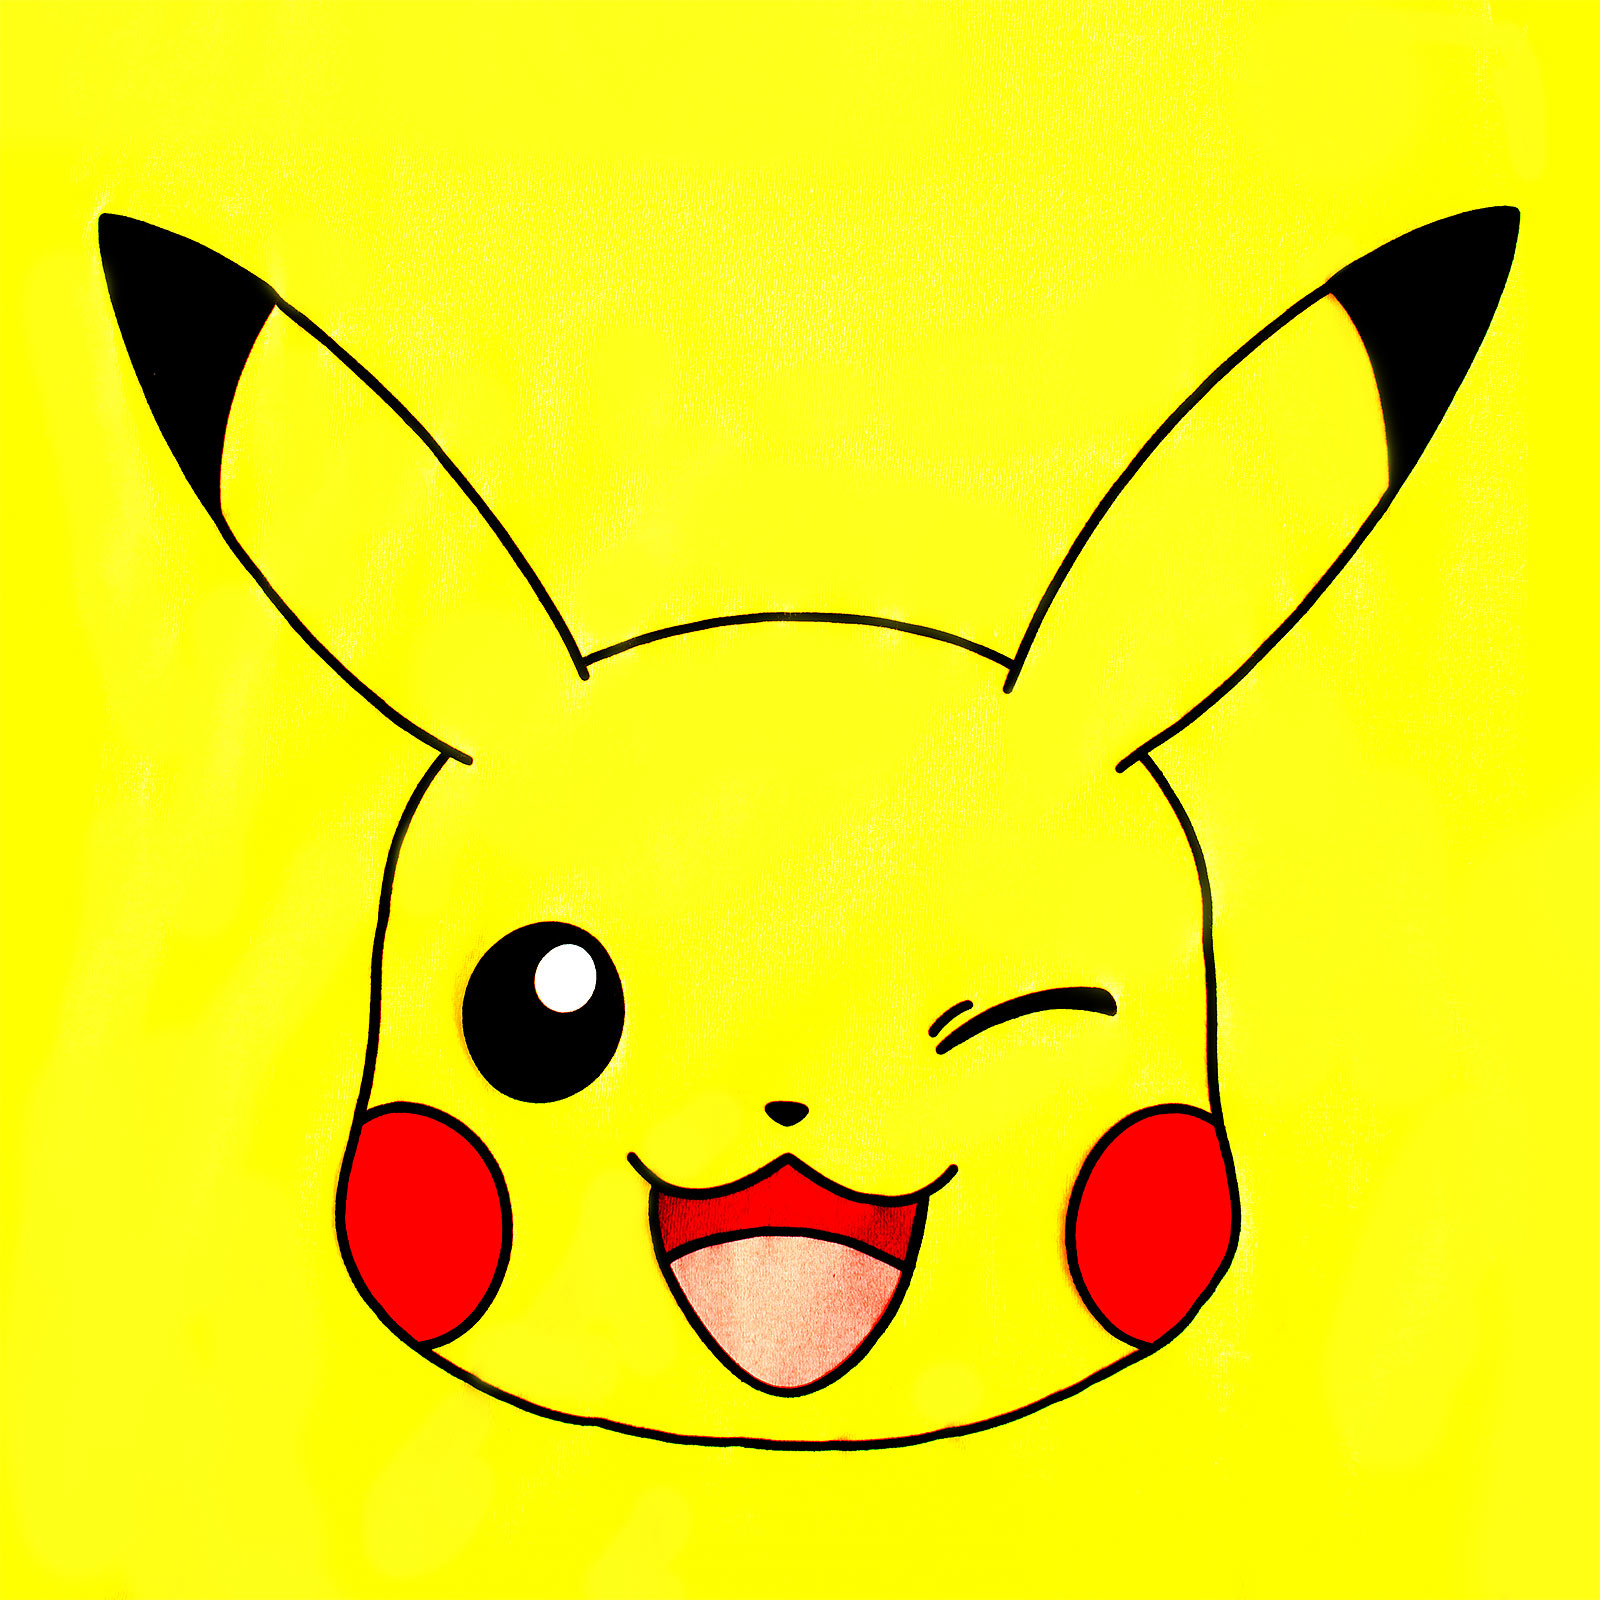 Pokemon - T-shirt Pikachu pour filles jaune